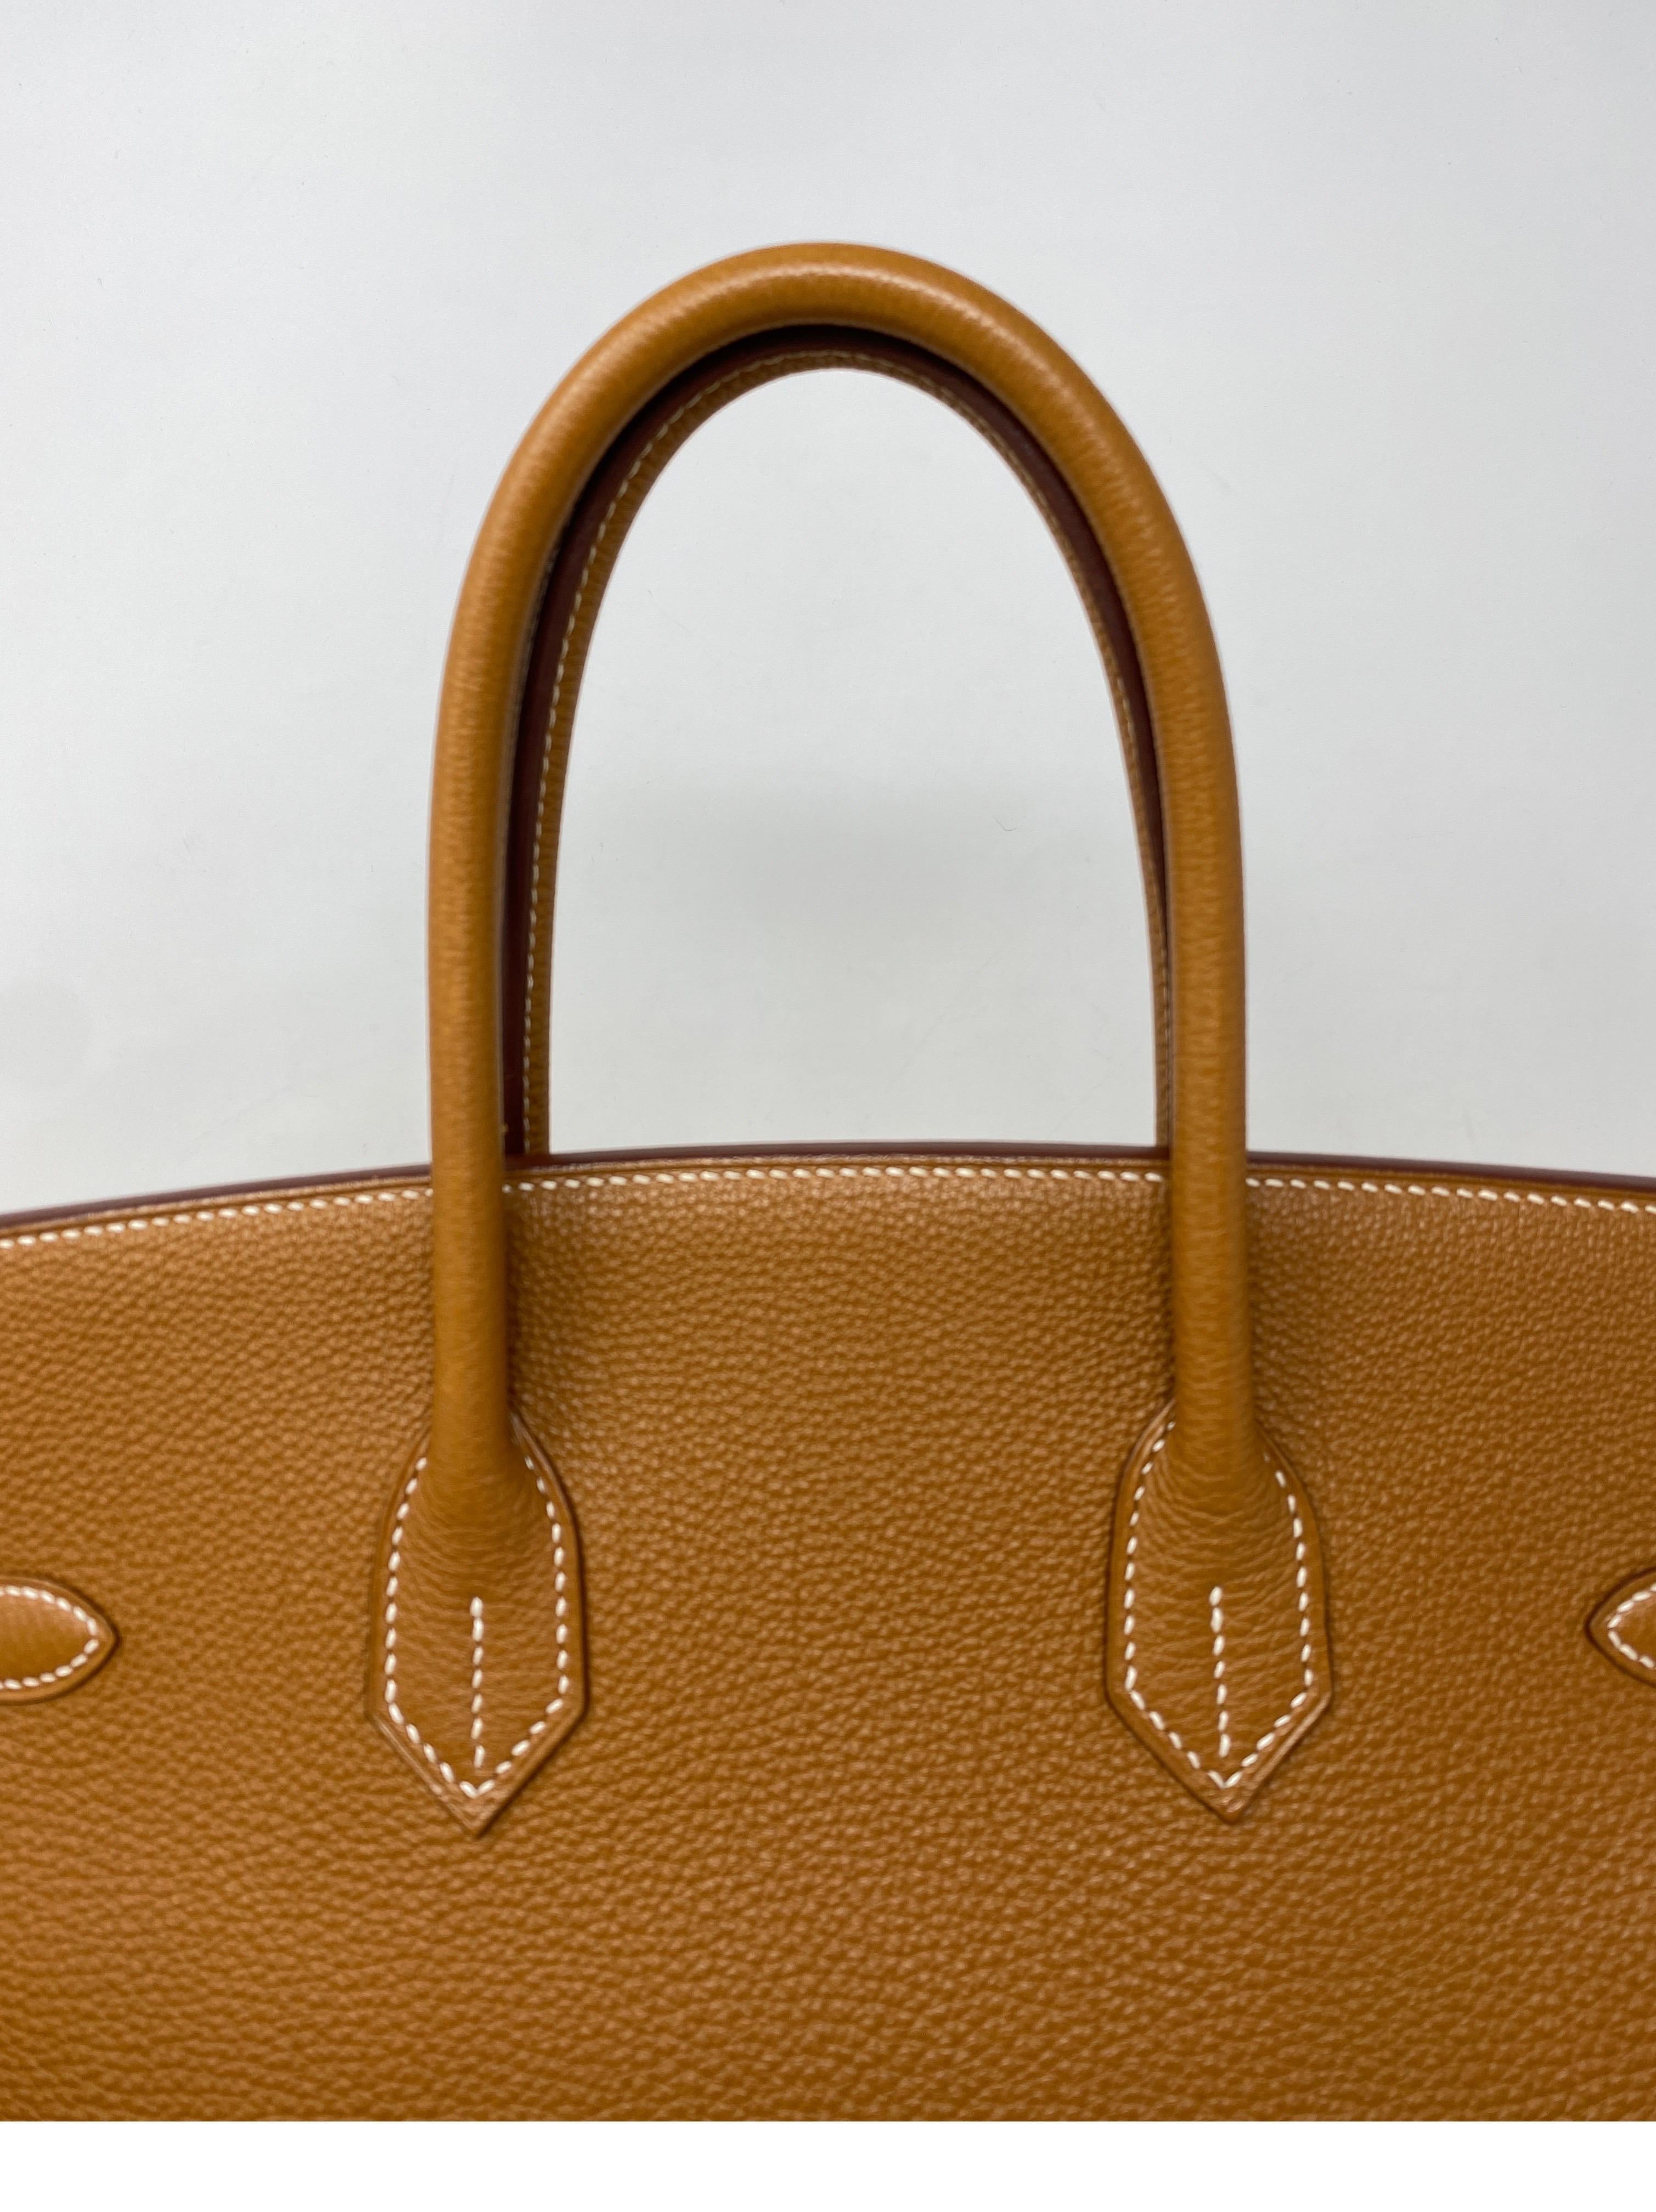 Brown Hermes Gold Birkin 35 Bag